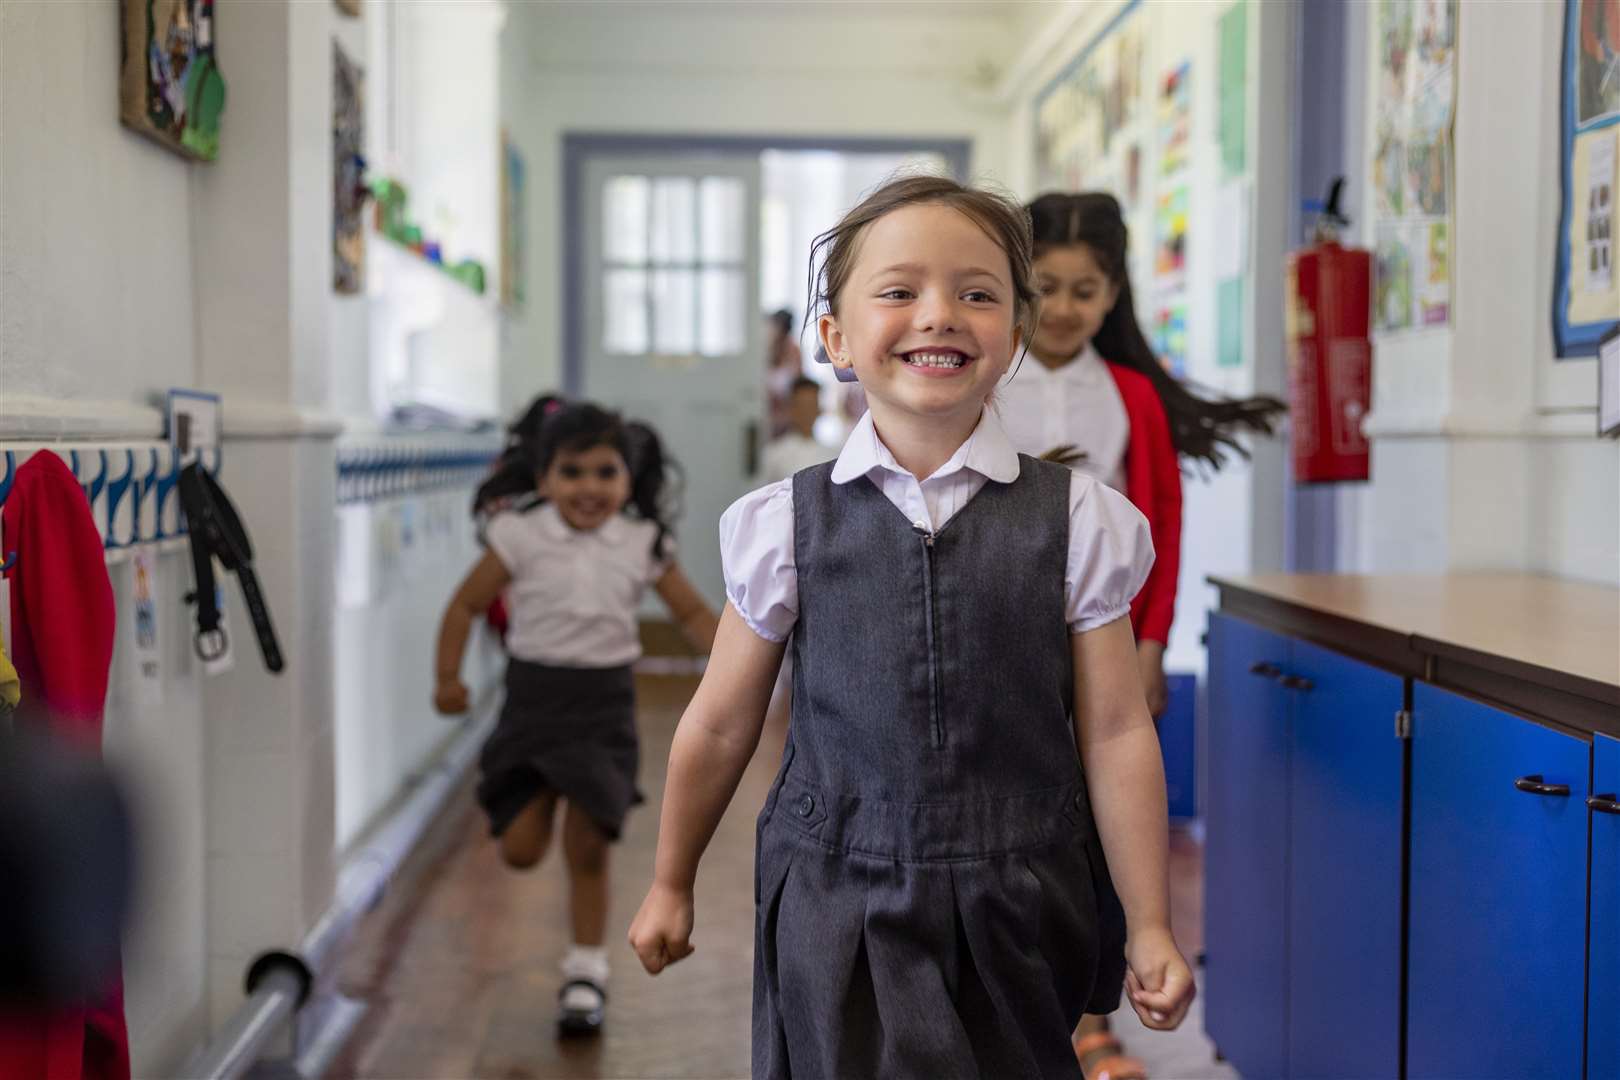 A new intake of children will start school in September. Image: iStock.